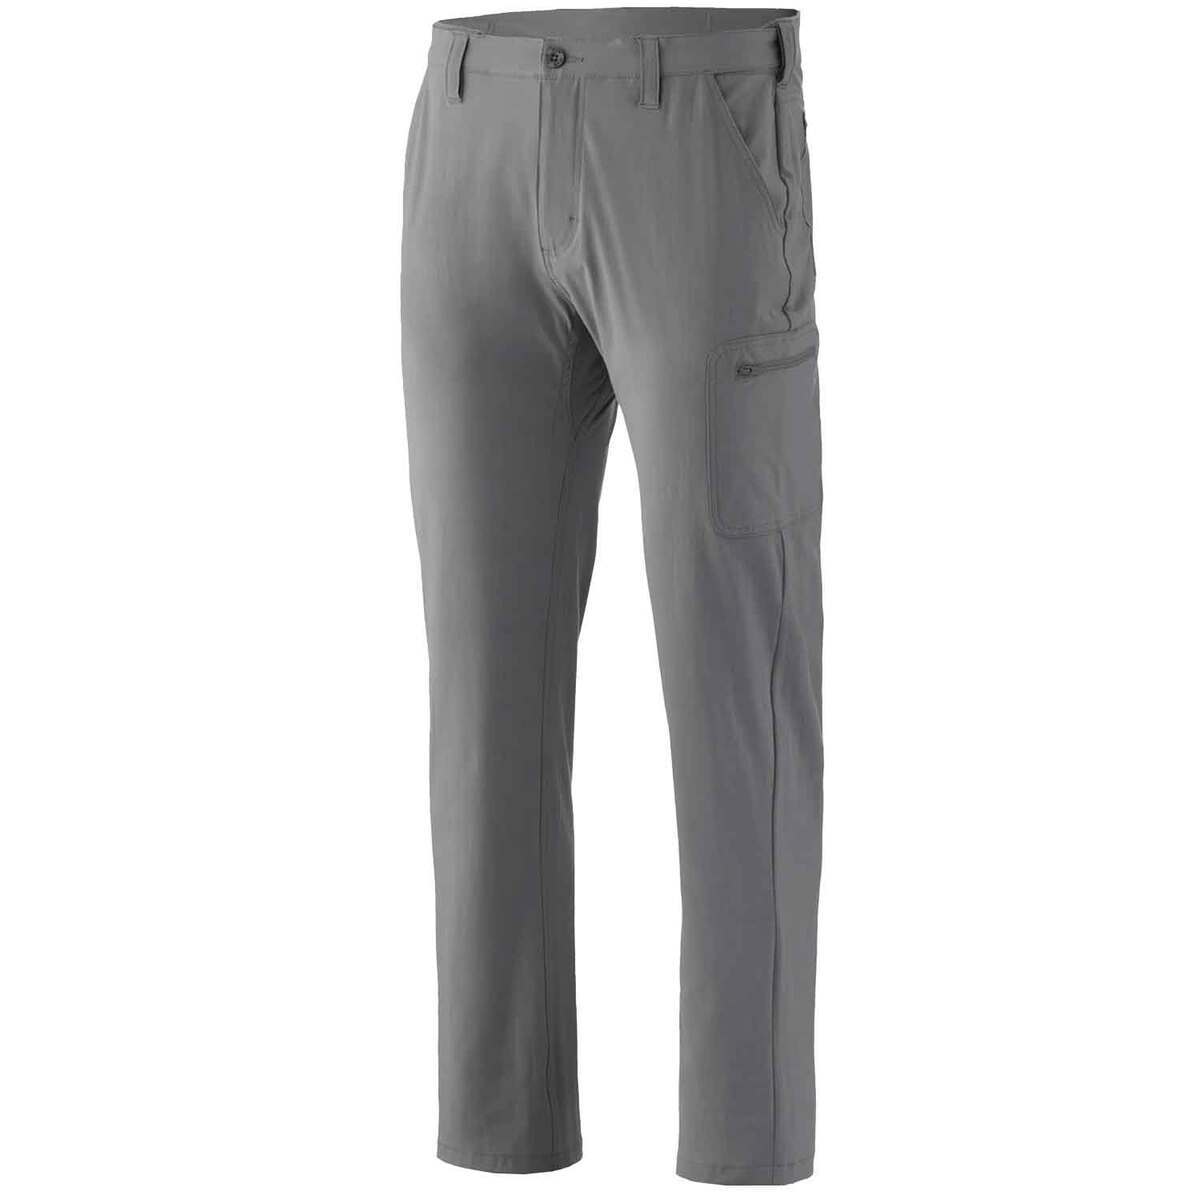 Huk Men's Next Level Fishing Pants - Overcast Grey - 3XL